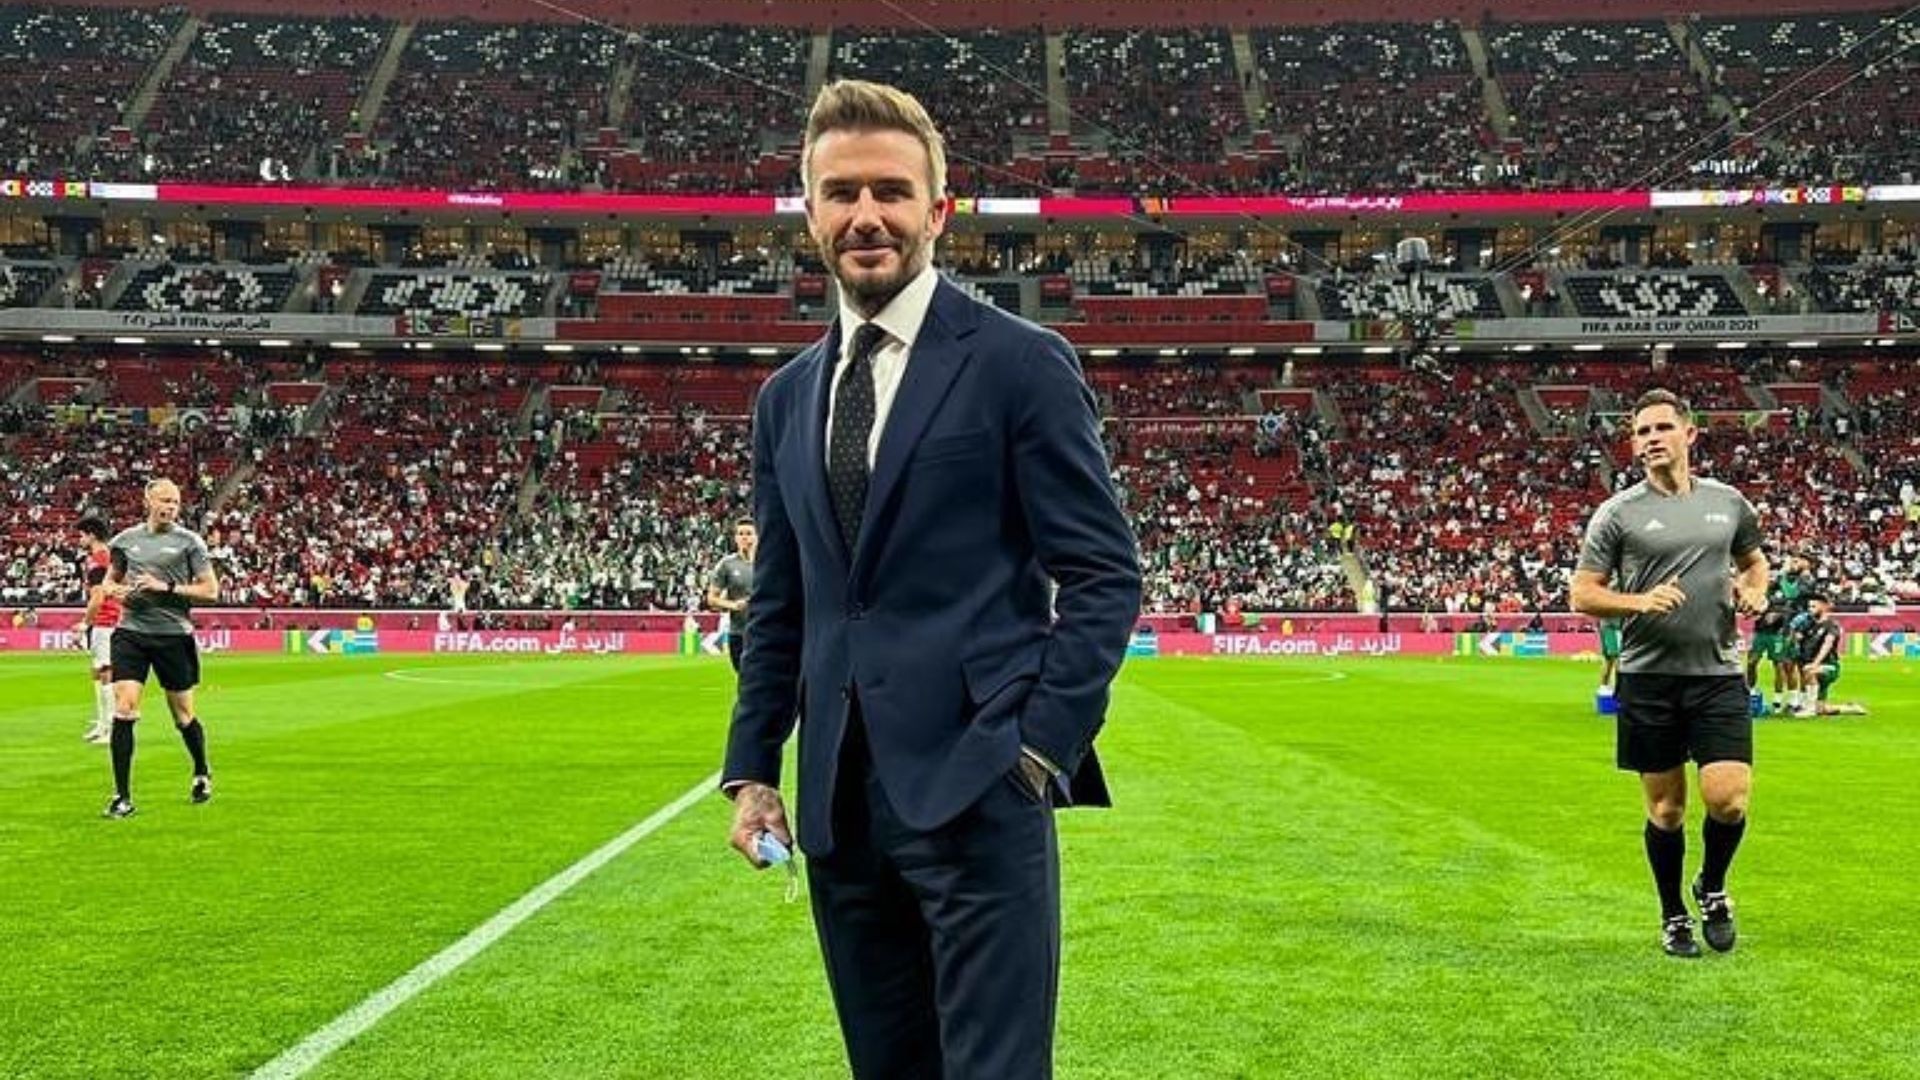 Popular Investor: David Beckham